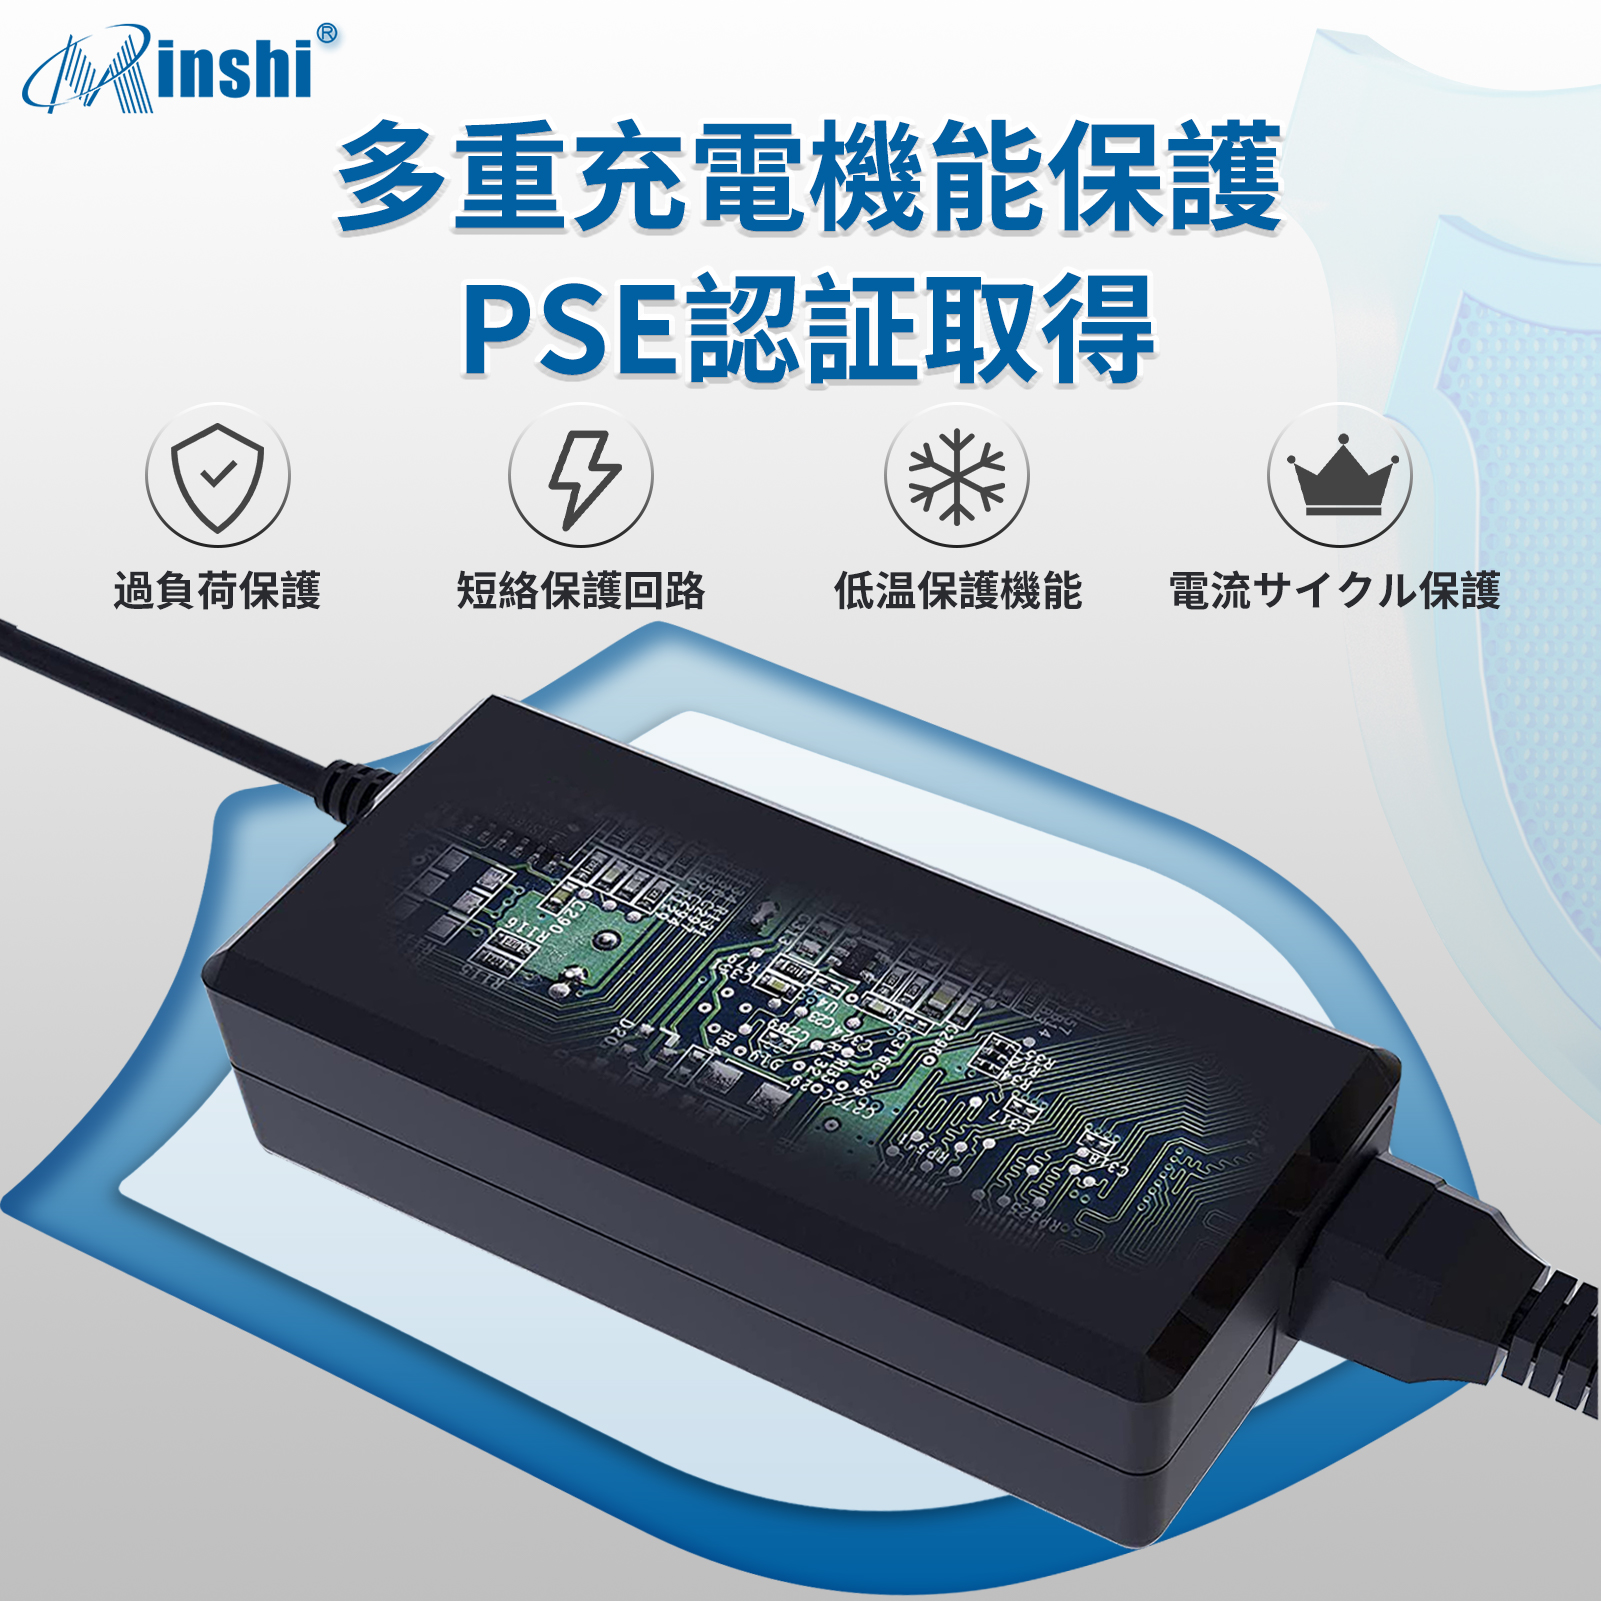  minshi HP  Pavilion Power 15-cb072TX 対応 3500mAh  高品質互換バッテリーWHA